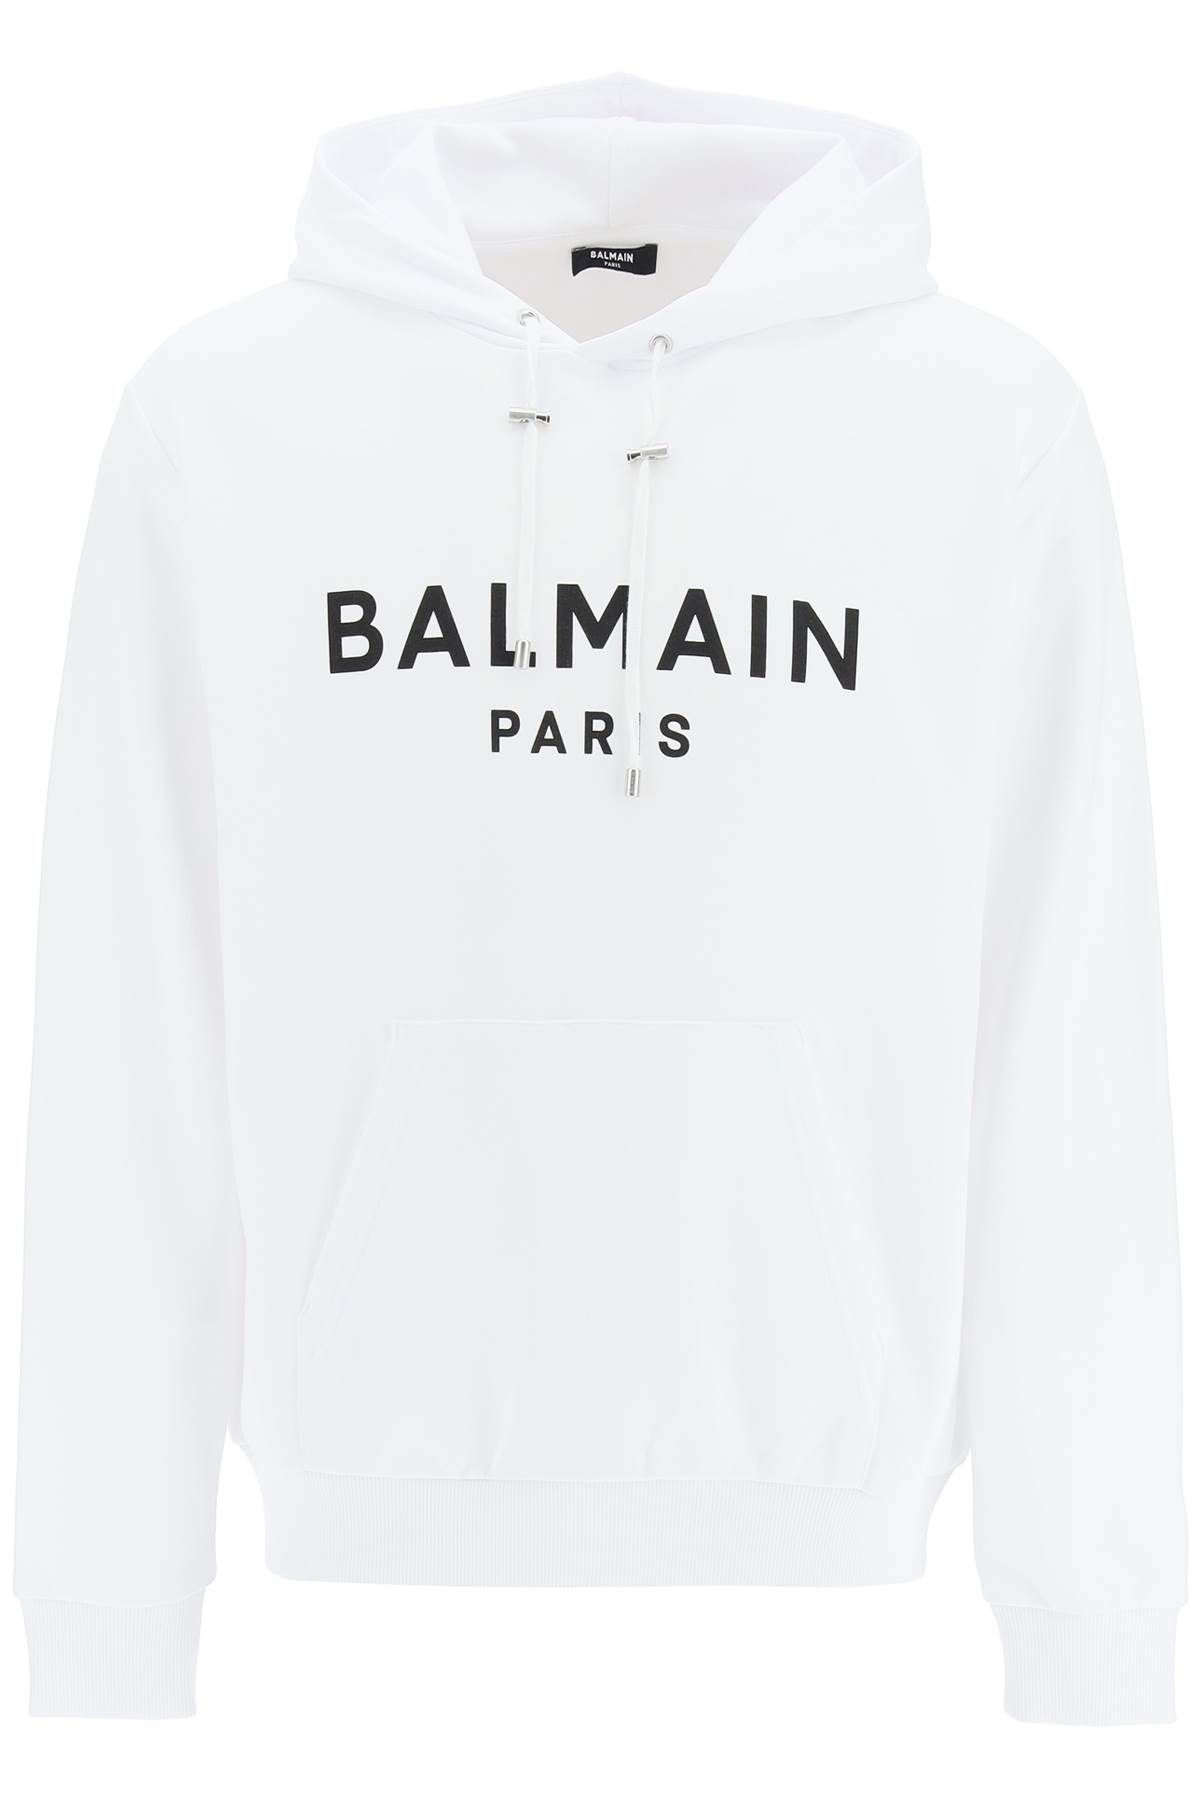 Balmain BALMAIN logo hoodie